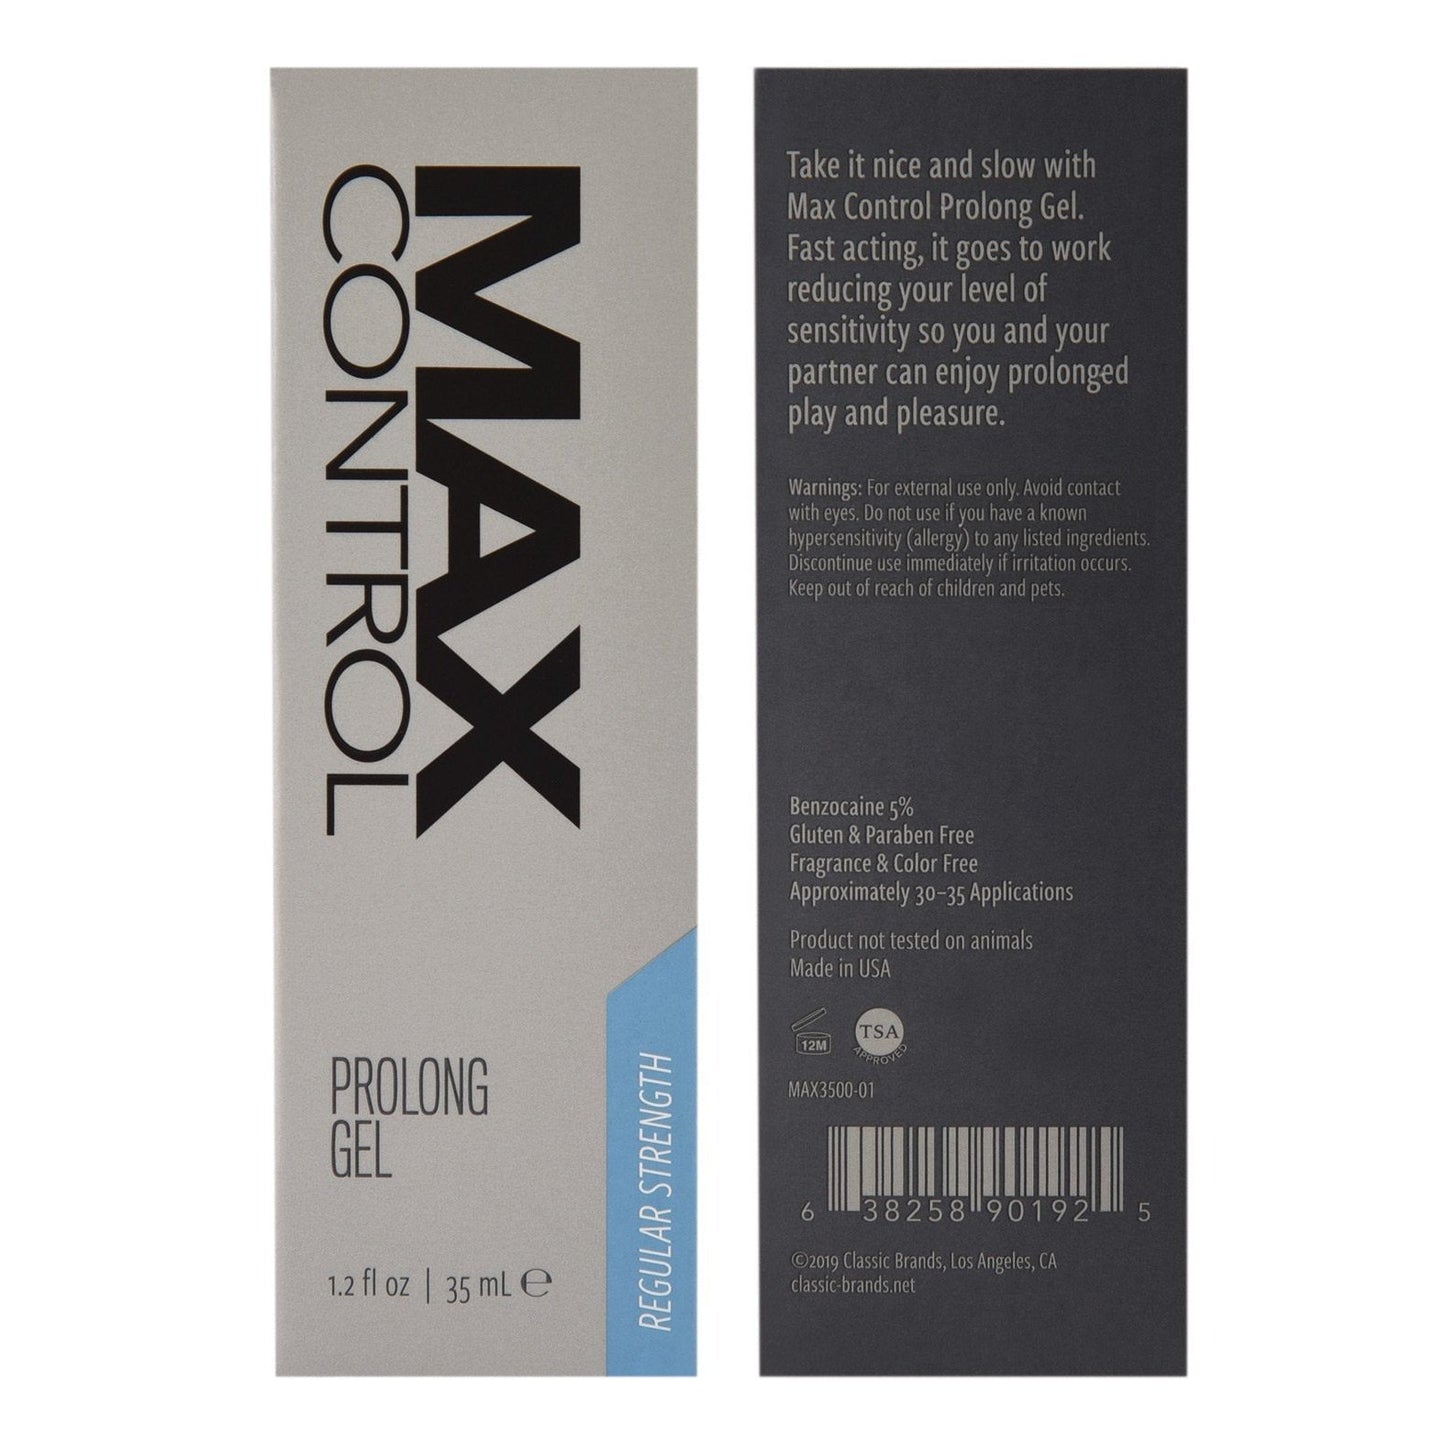 Max Control Prolong Gel Regular Strength - 1.2 oz